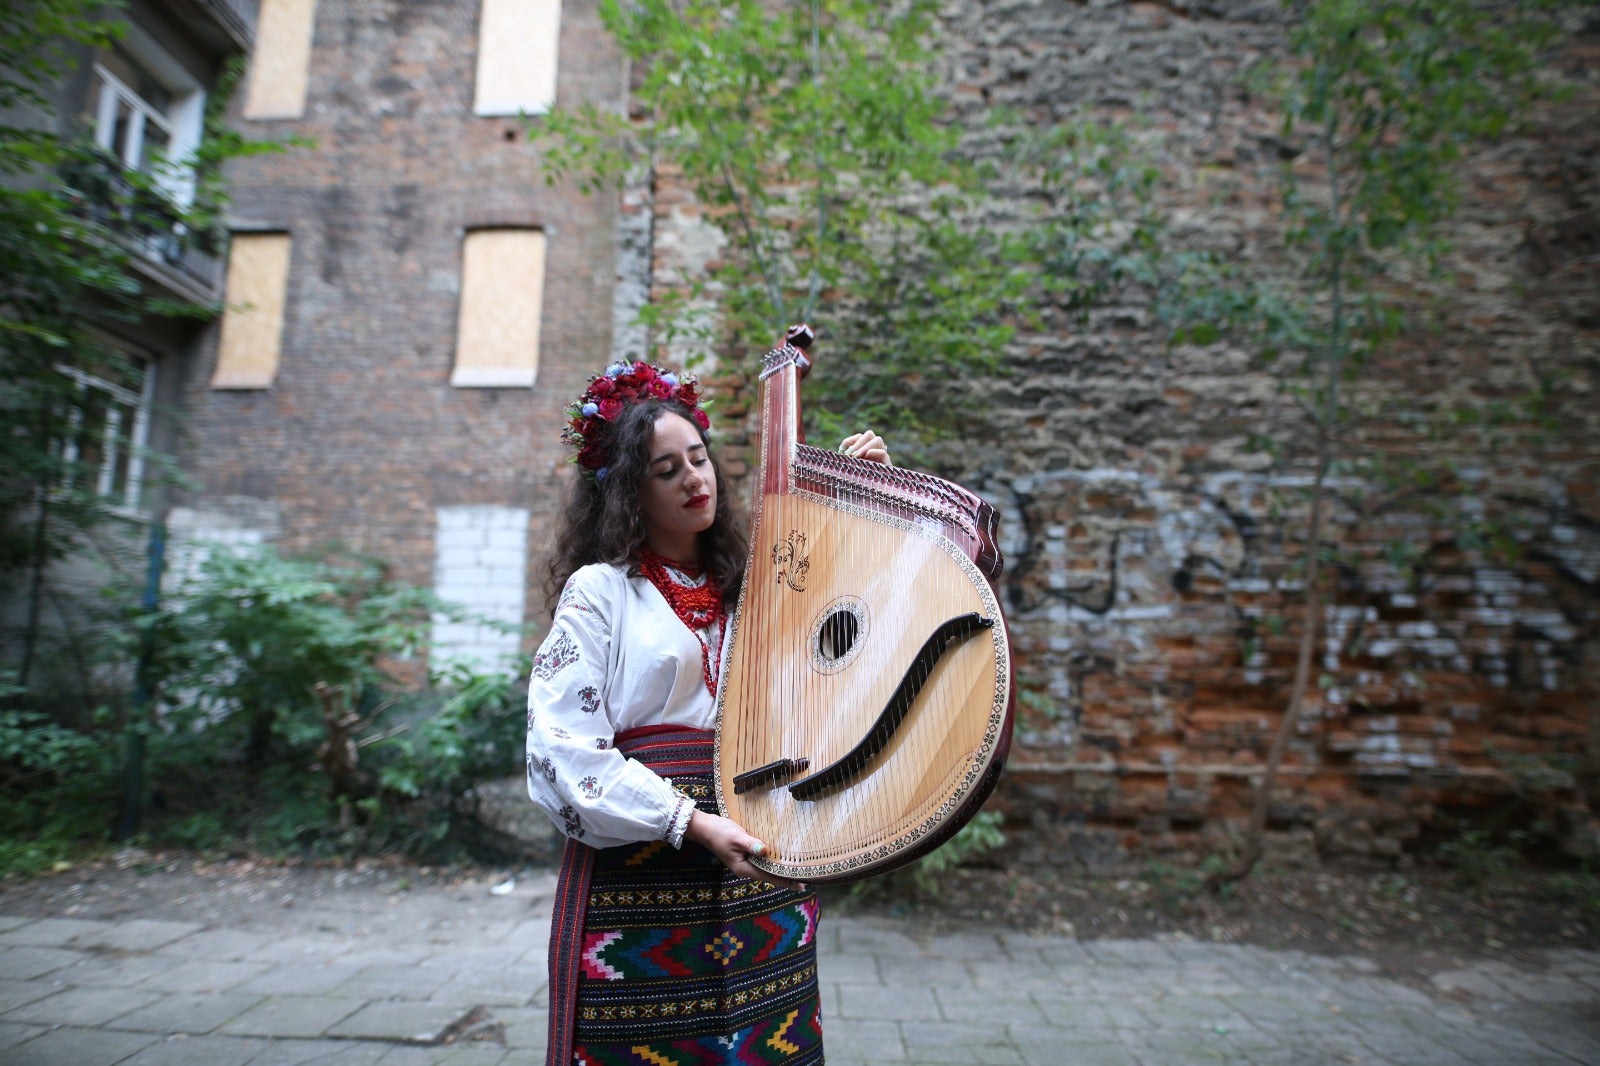 Femme en costume traditionnel tenant un bandura